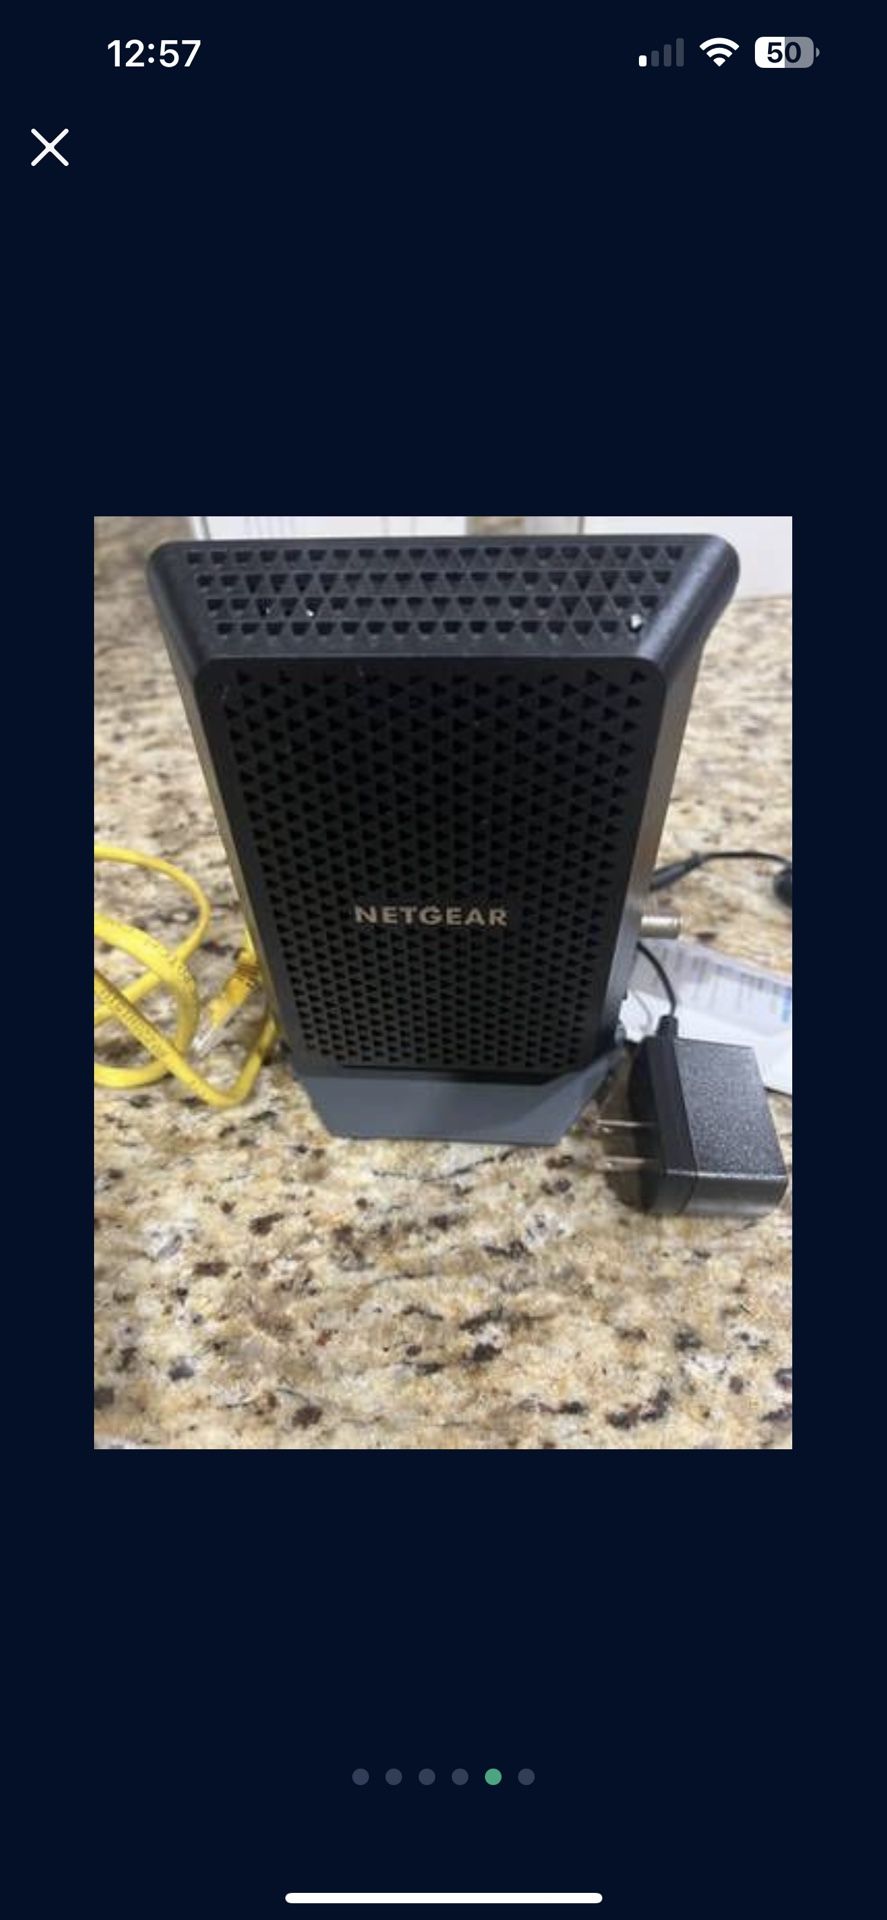 Netgear Wireless Modem